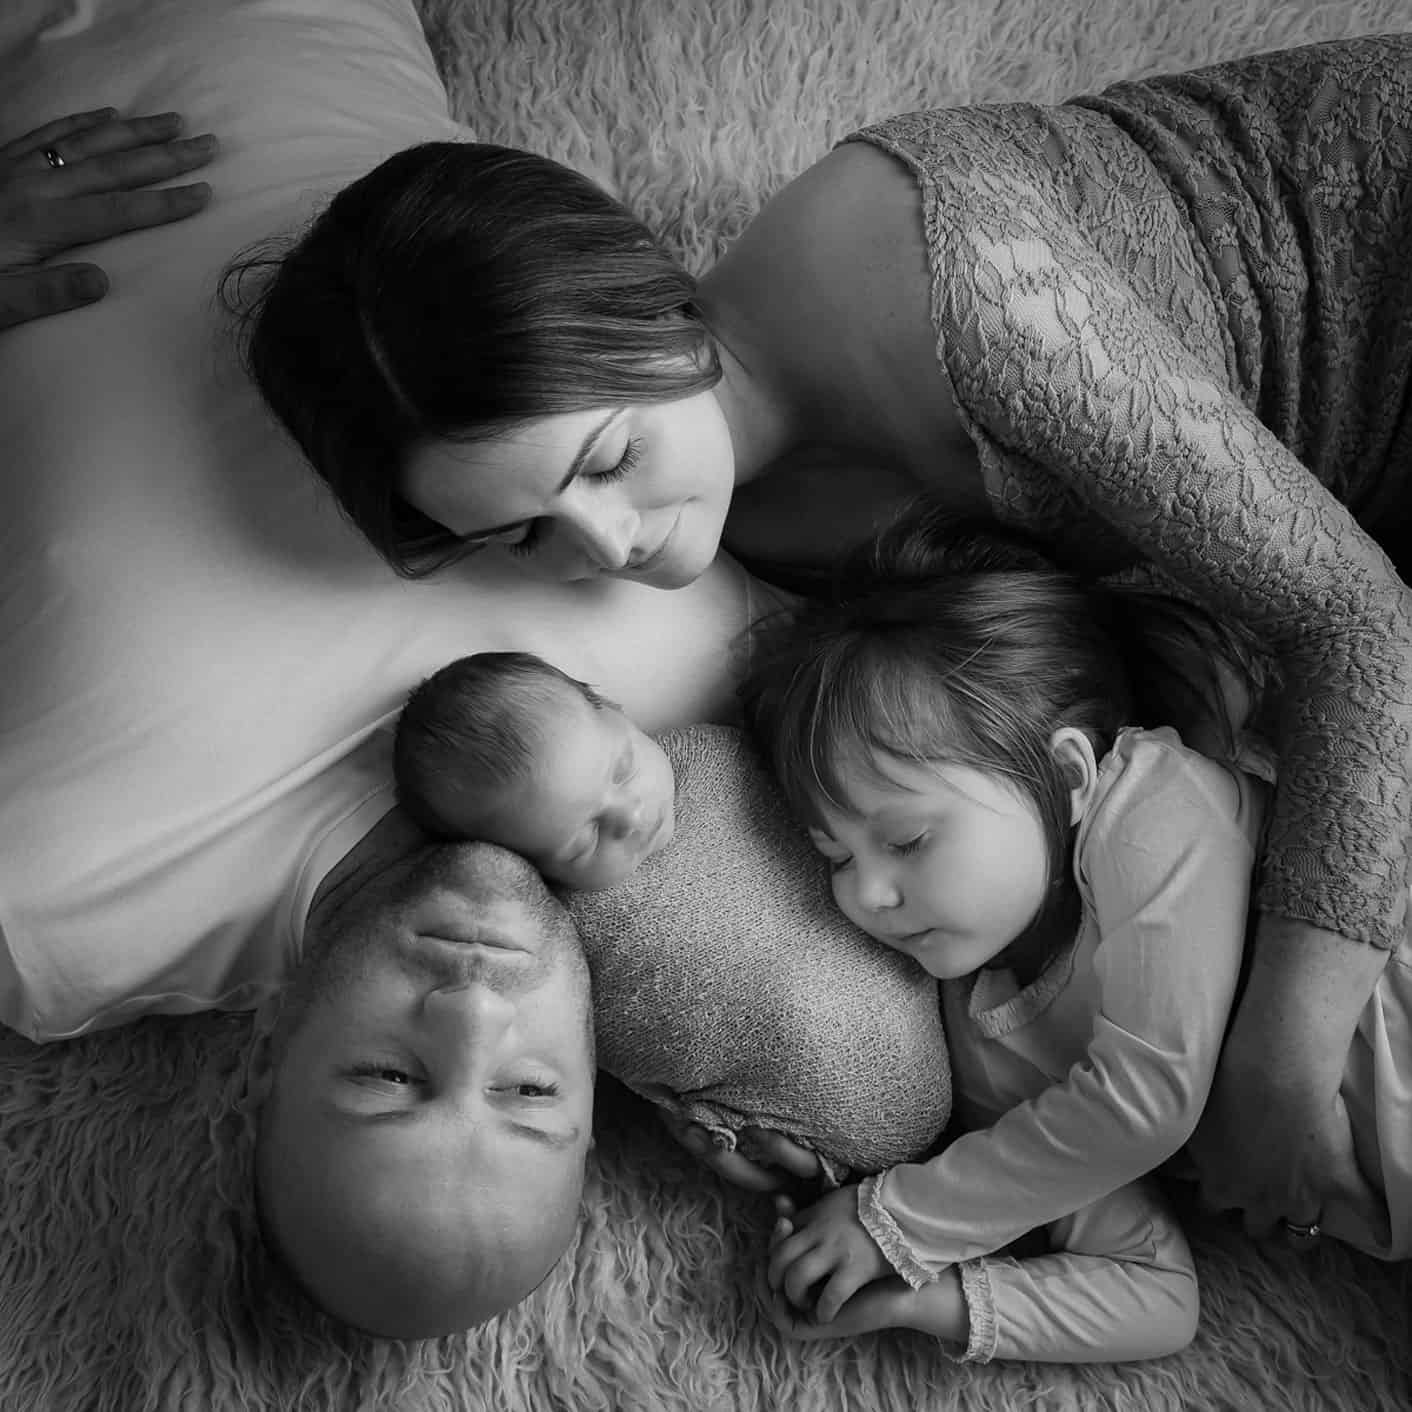 newborn photography ideas for family photo